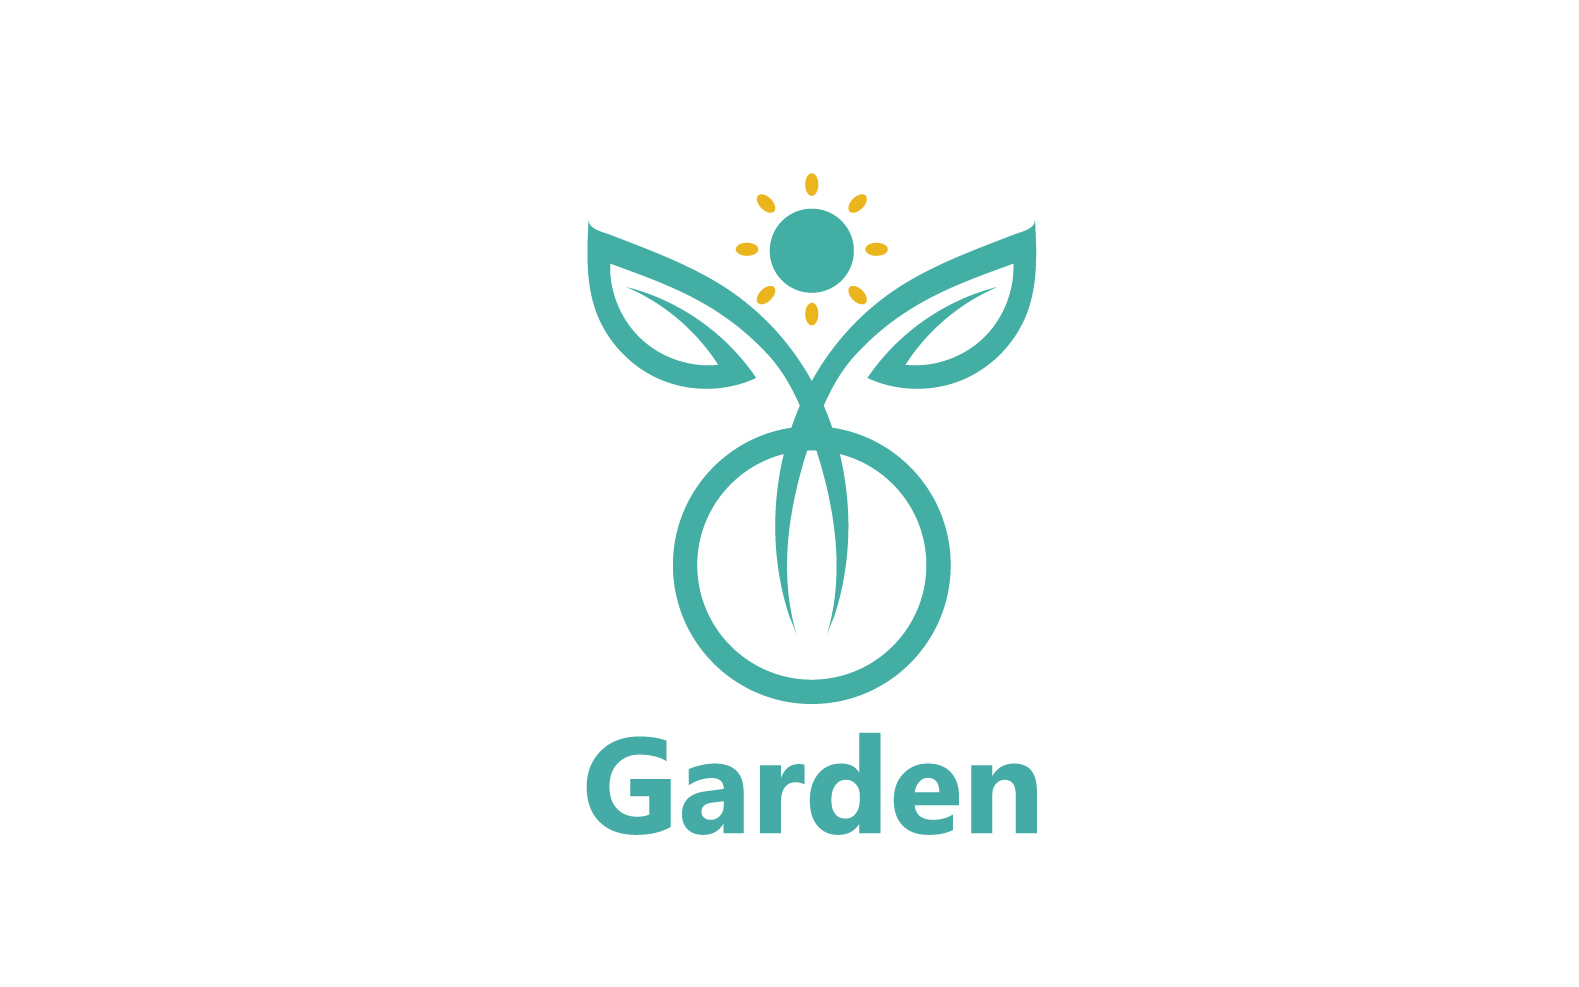 Leaf Garden Logo And Symbol Vector